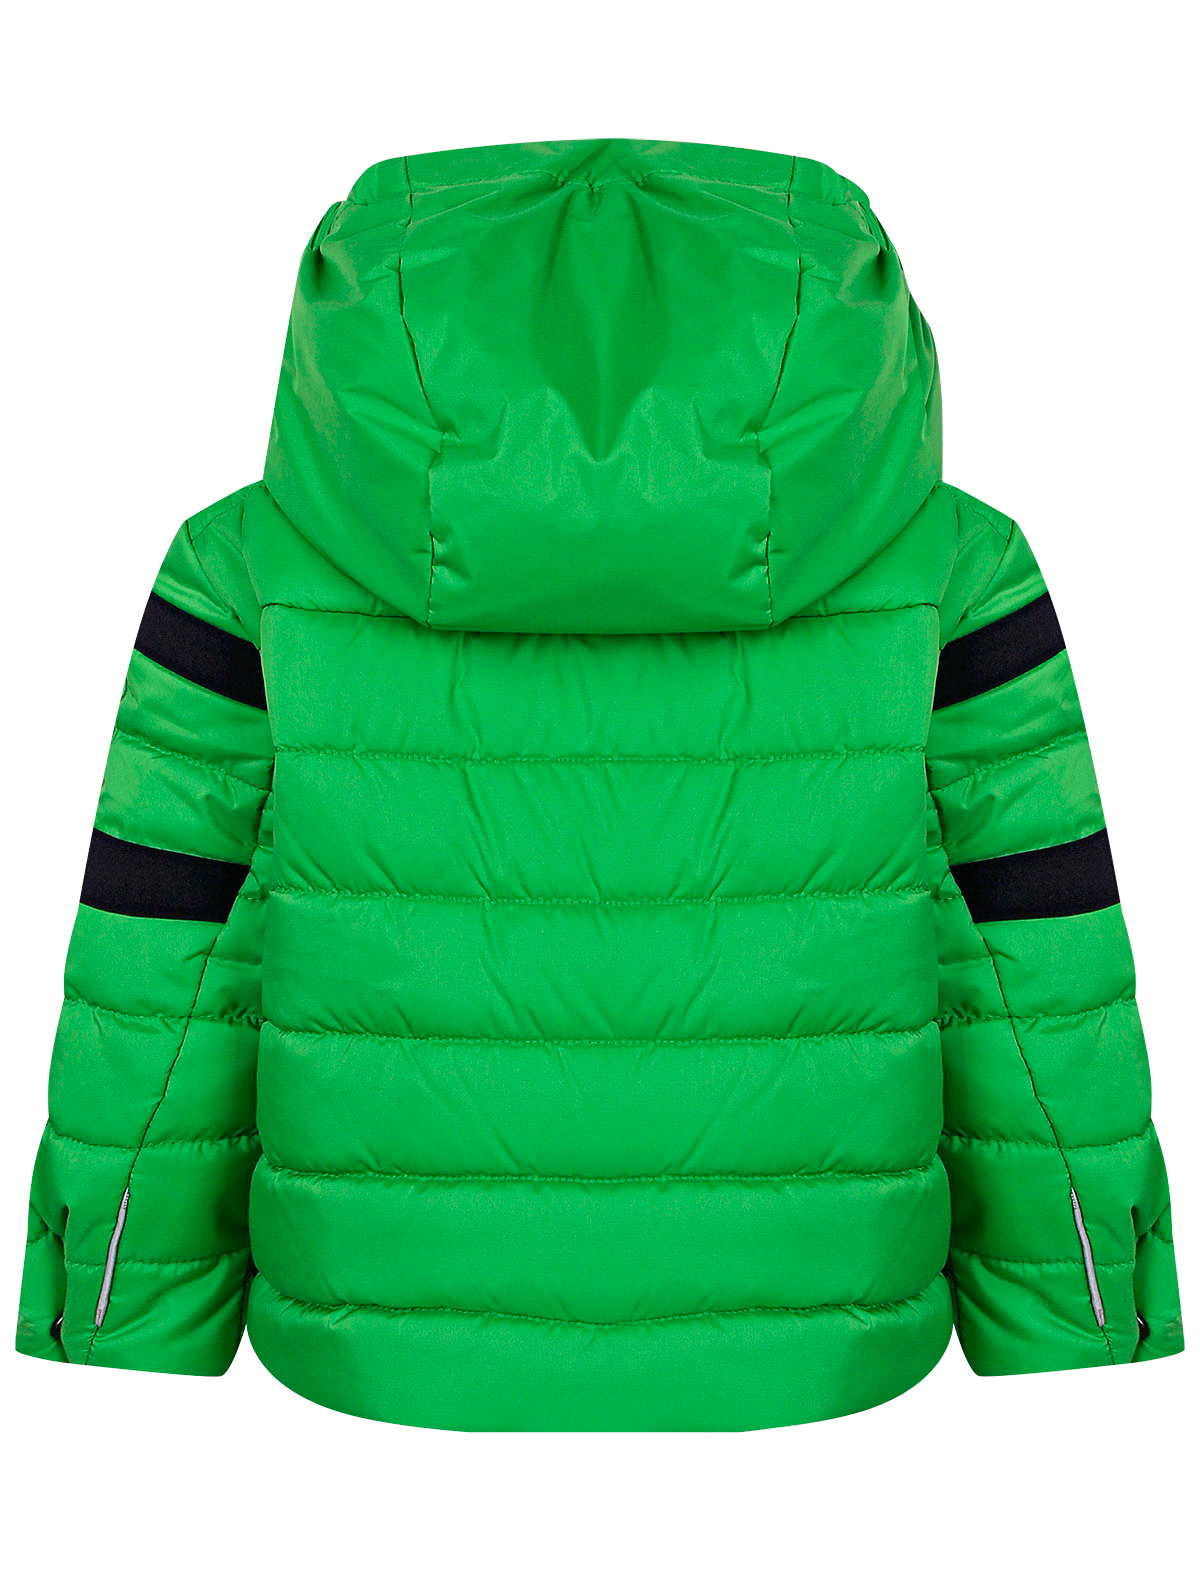 Куртка POIVRE BLANC 2349749, цвет зеленый, размер 4 1074519182105 - фото 2